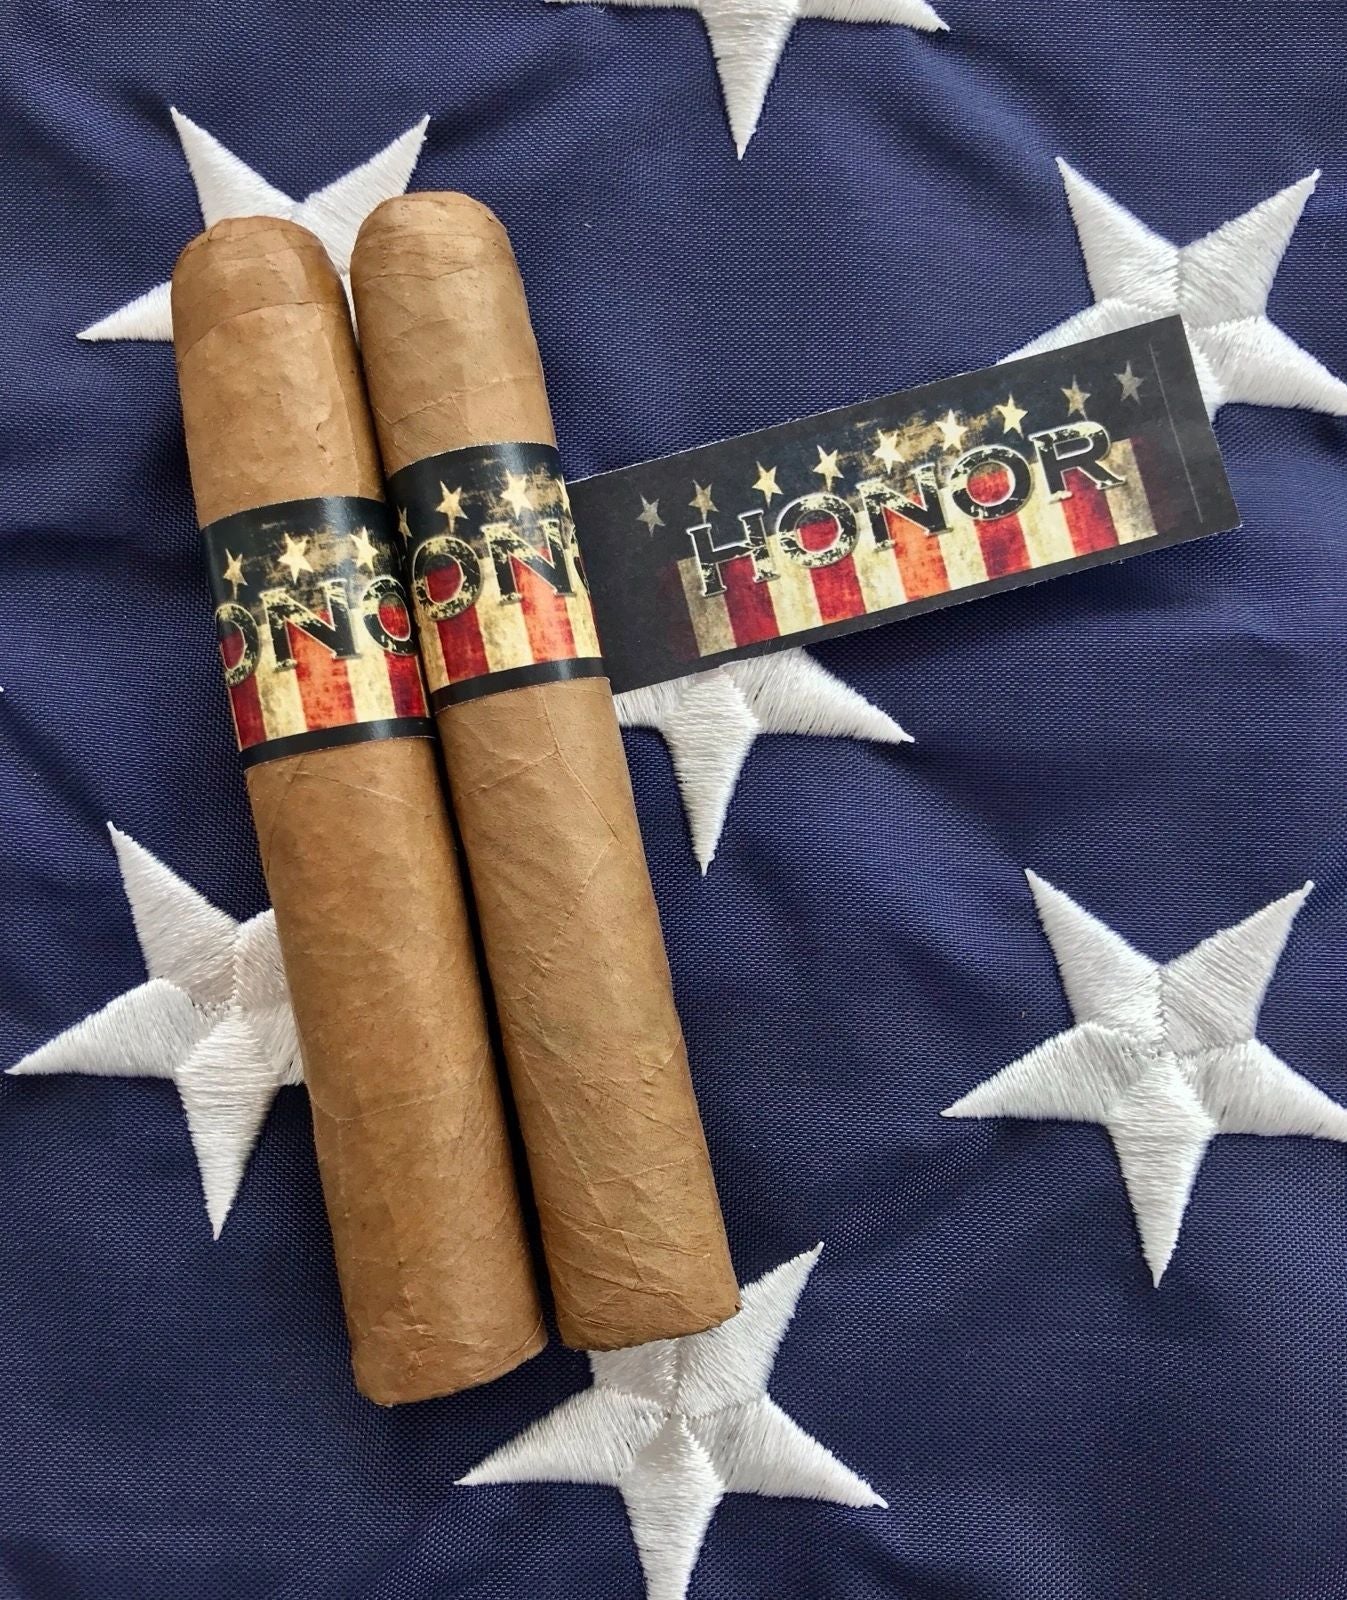 The HONOR Series Cigar